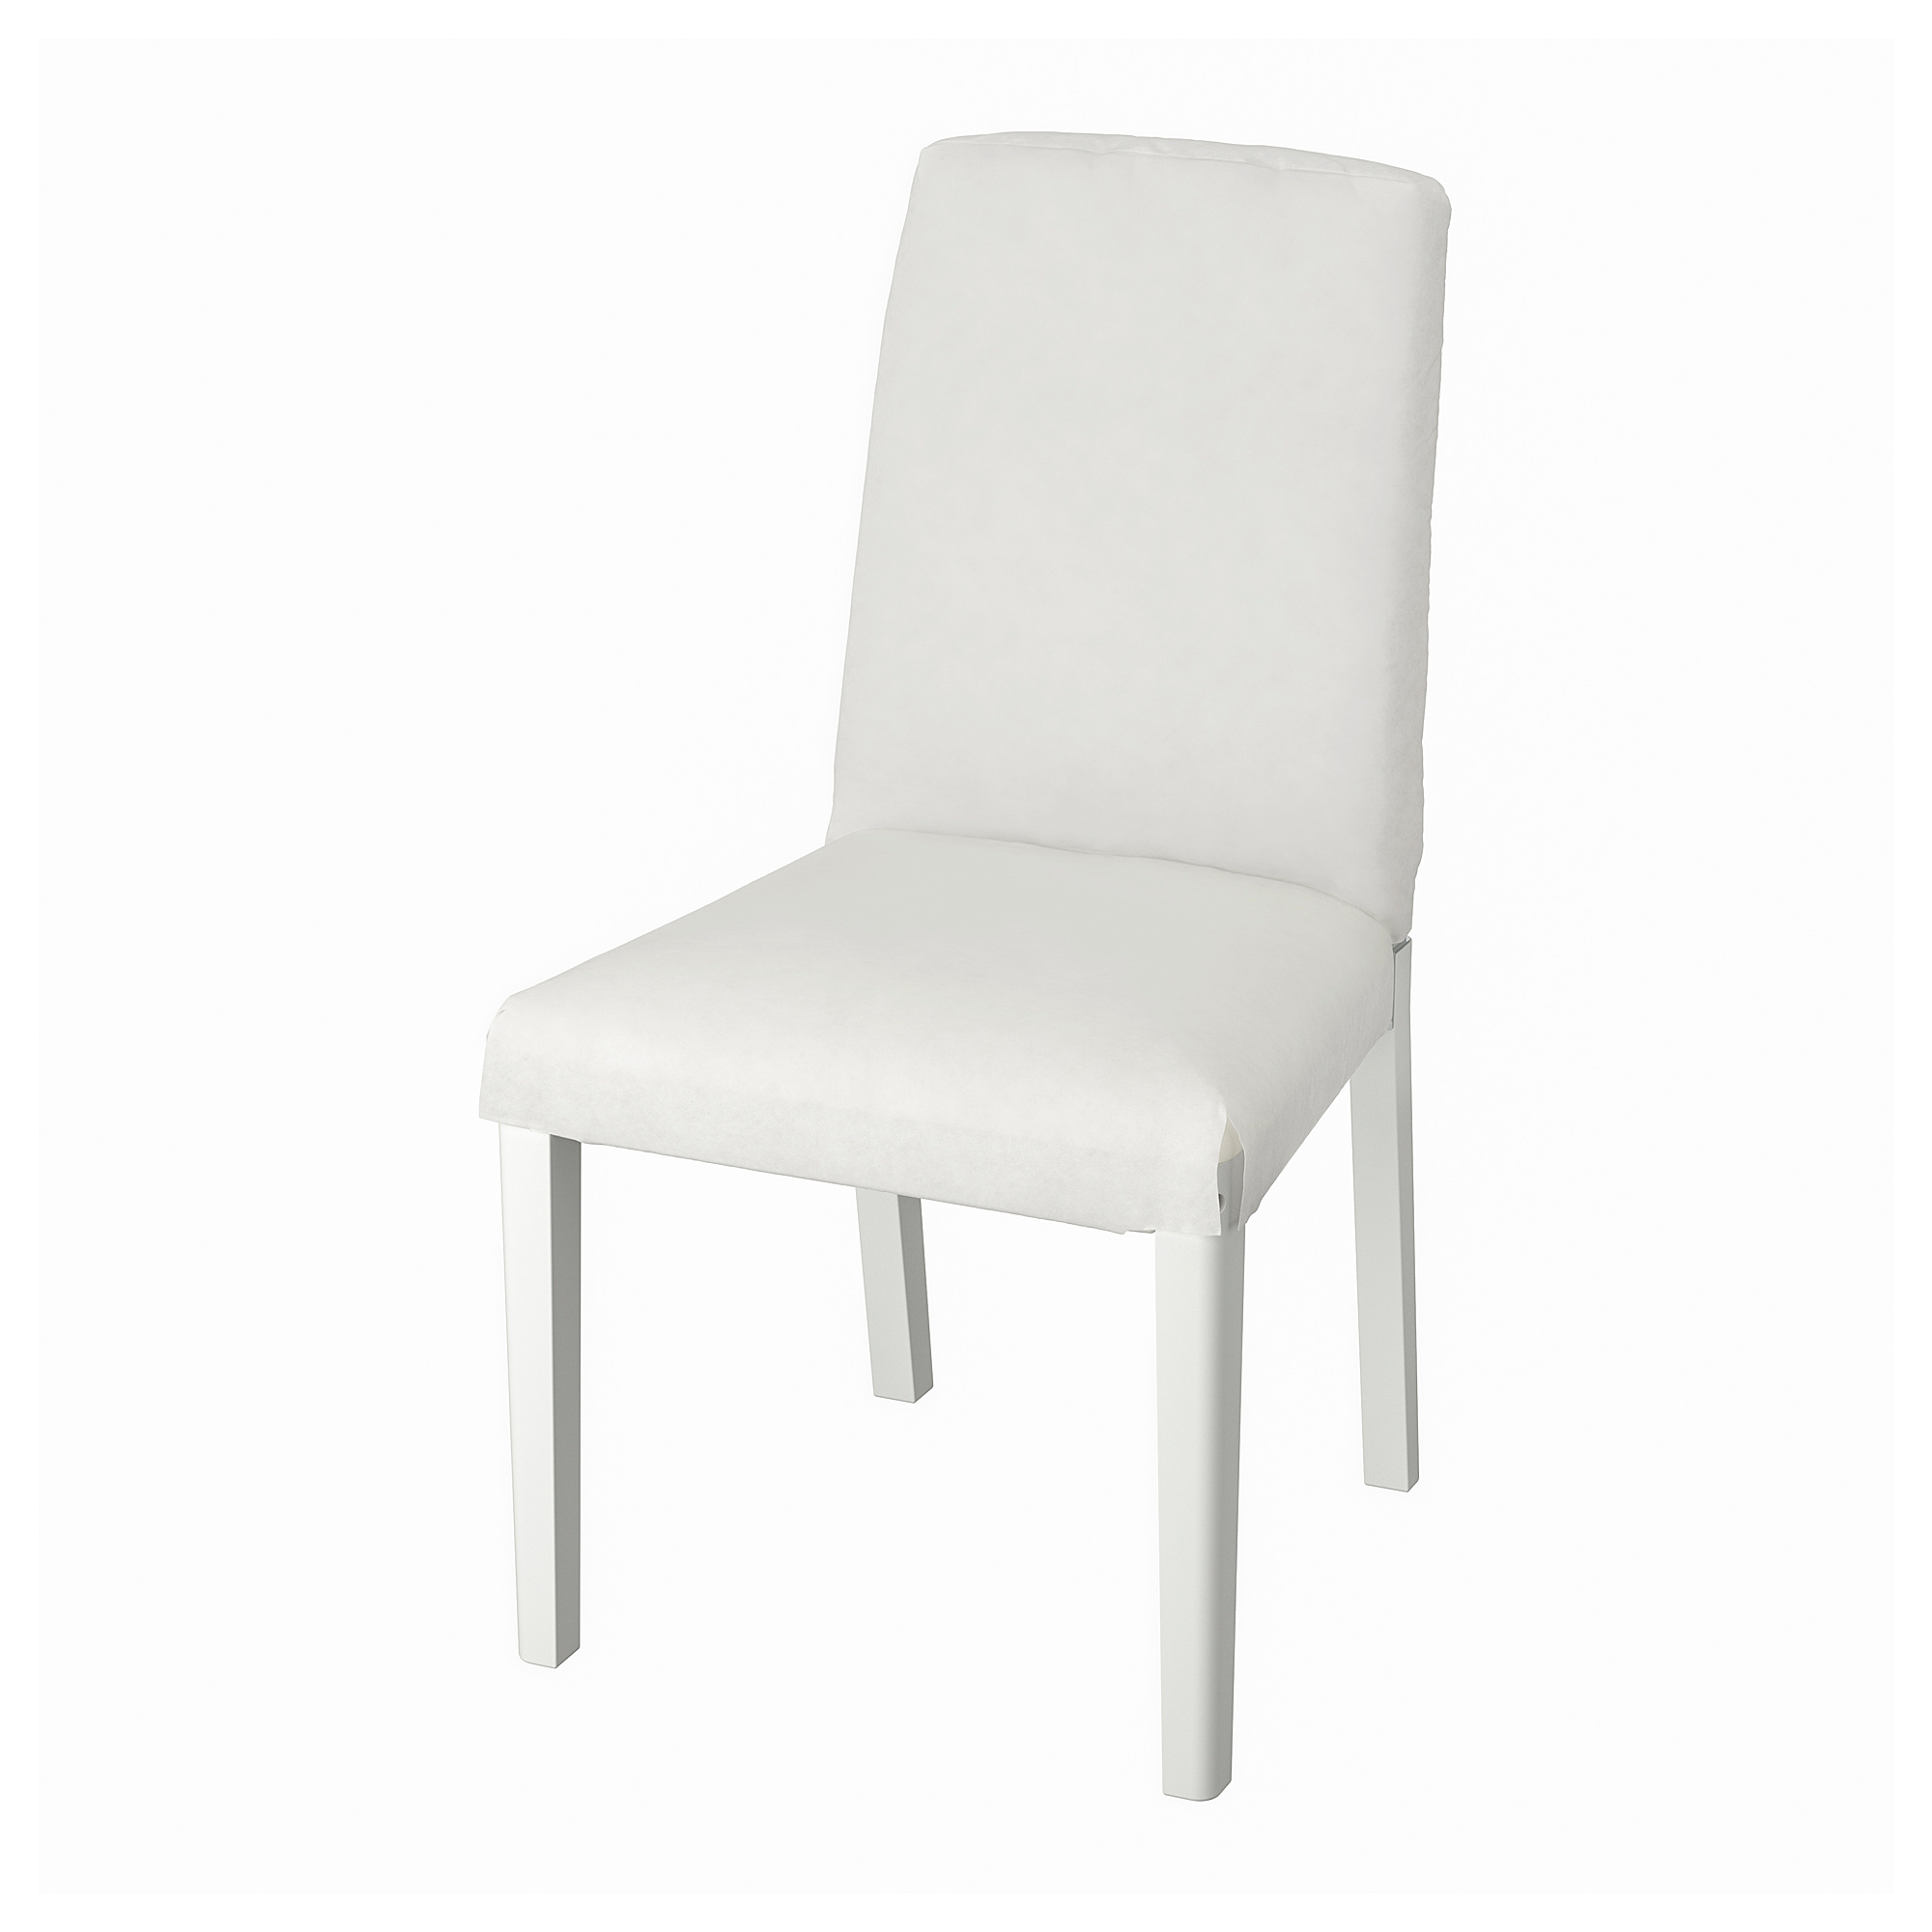 BERGMUND chair frame